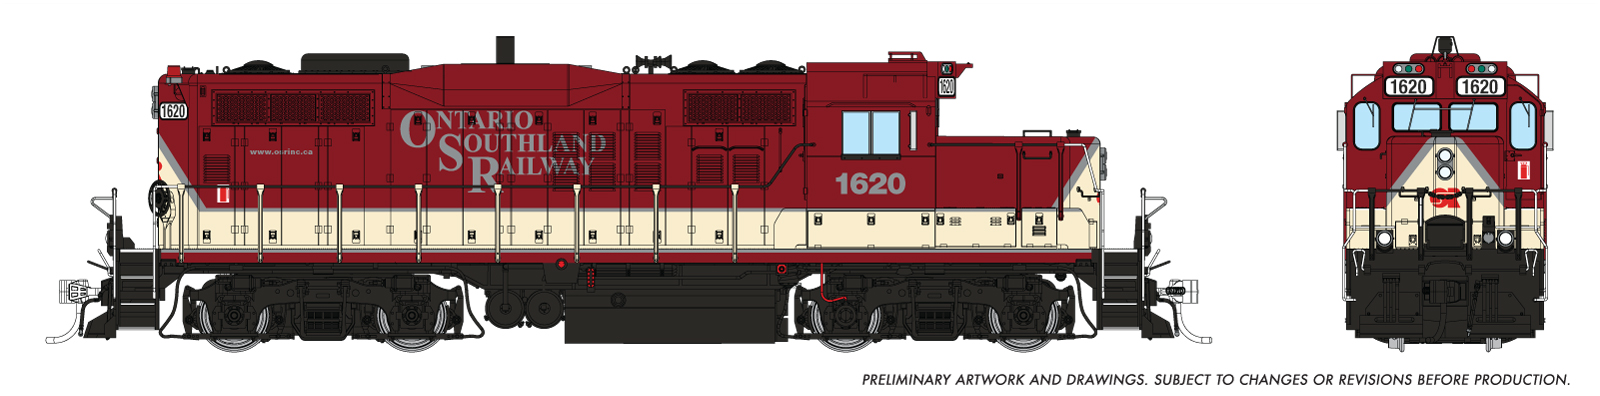 Rapido 54527 - HO GP9u - DC/DCC/Sound - Ontario Southland Railway #1620 - Otter Valley Railroad Exclusive